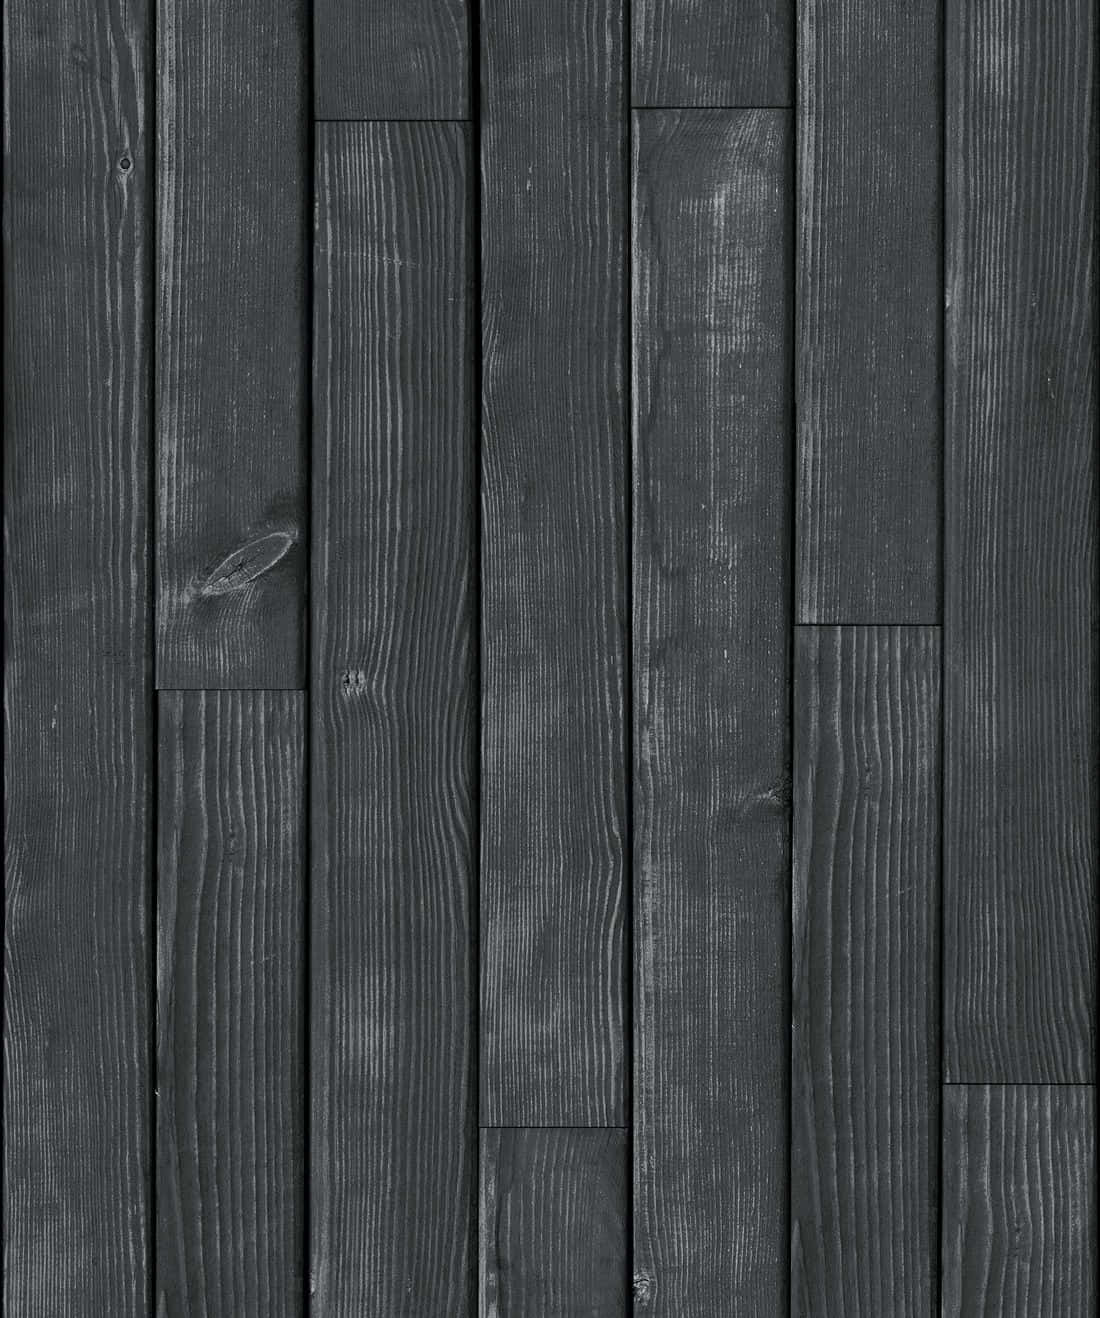 Burnt Spruce Wood Planks Wooden Background Wallpaper